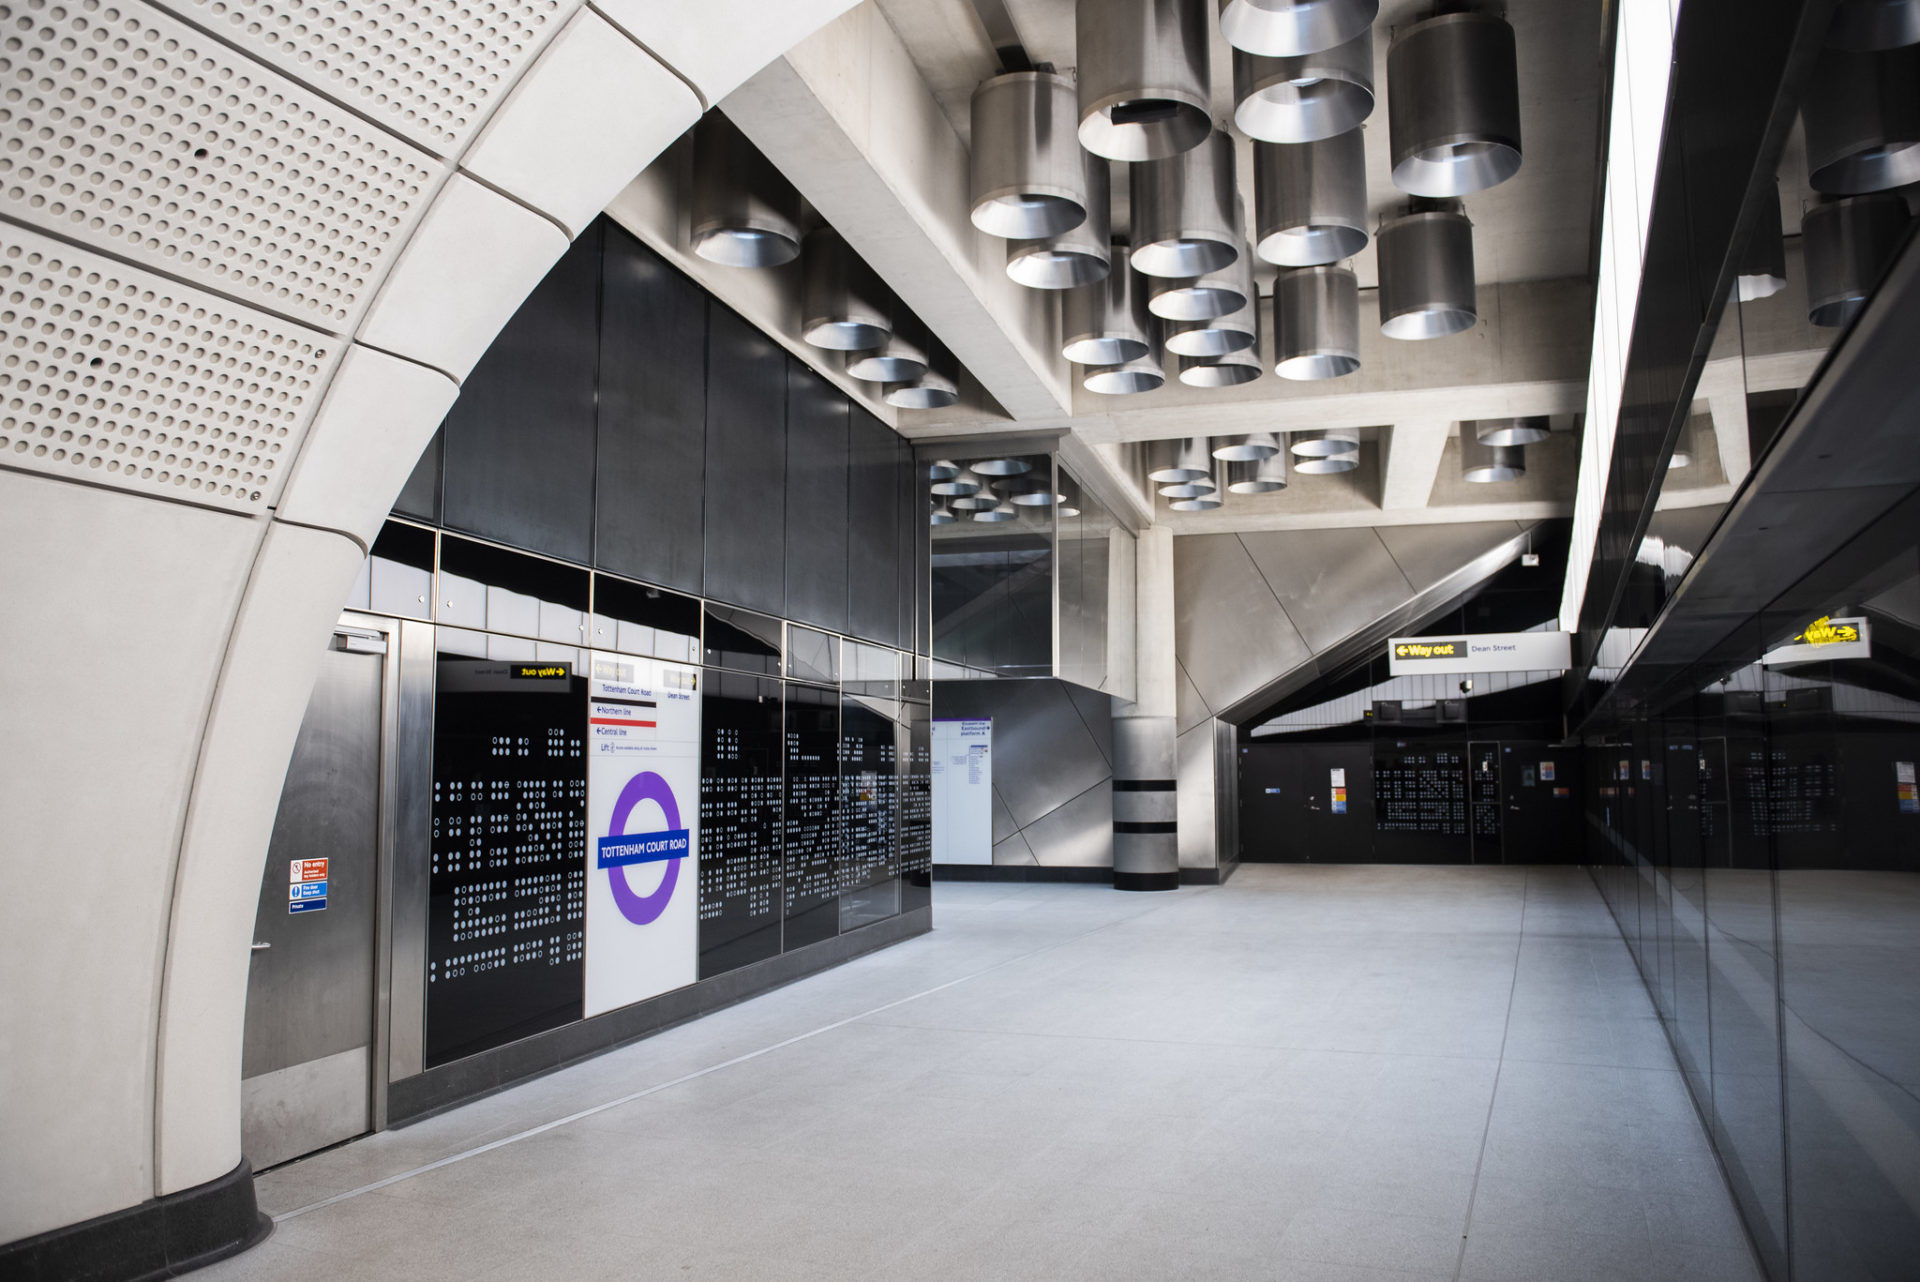 Laing O’Rourke built the new Tottenham Court Road Elizabeth Line station